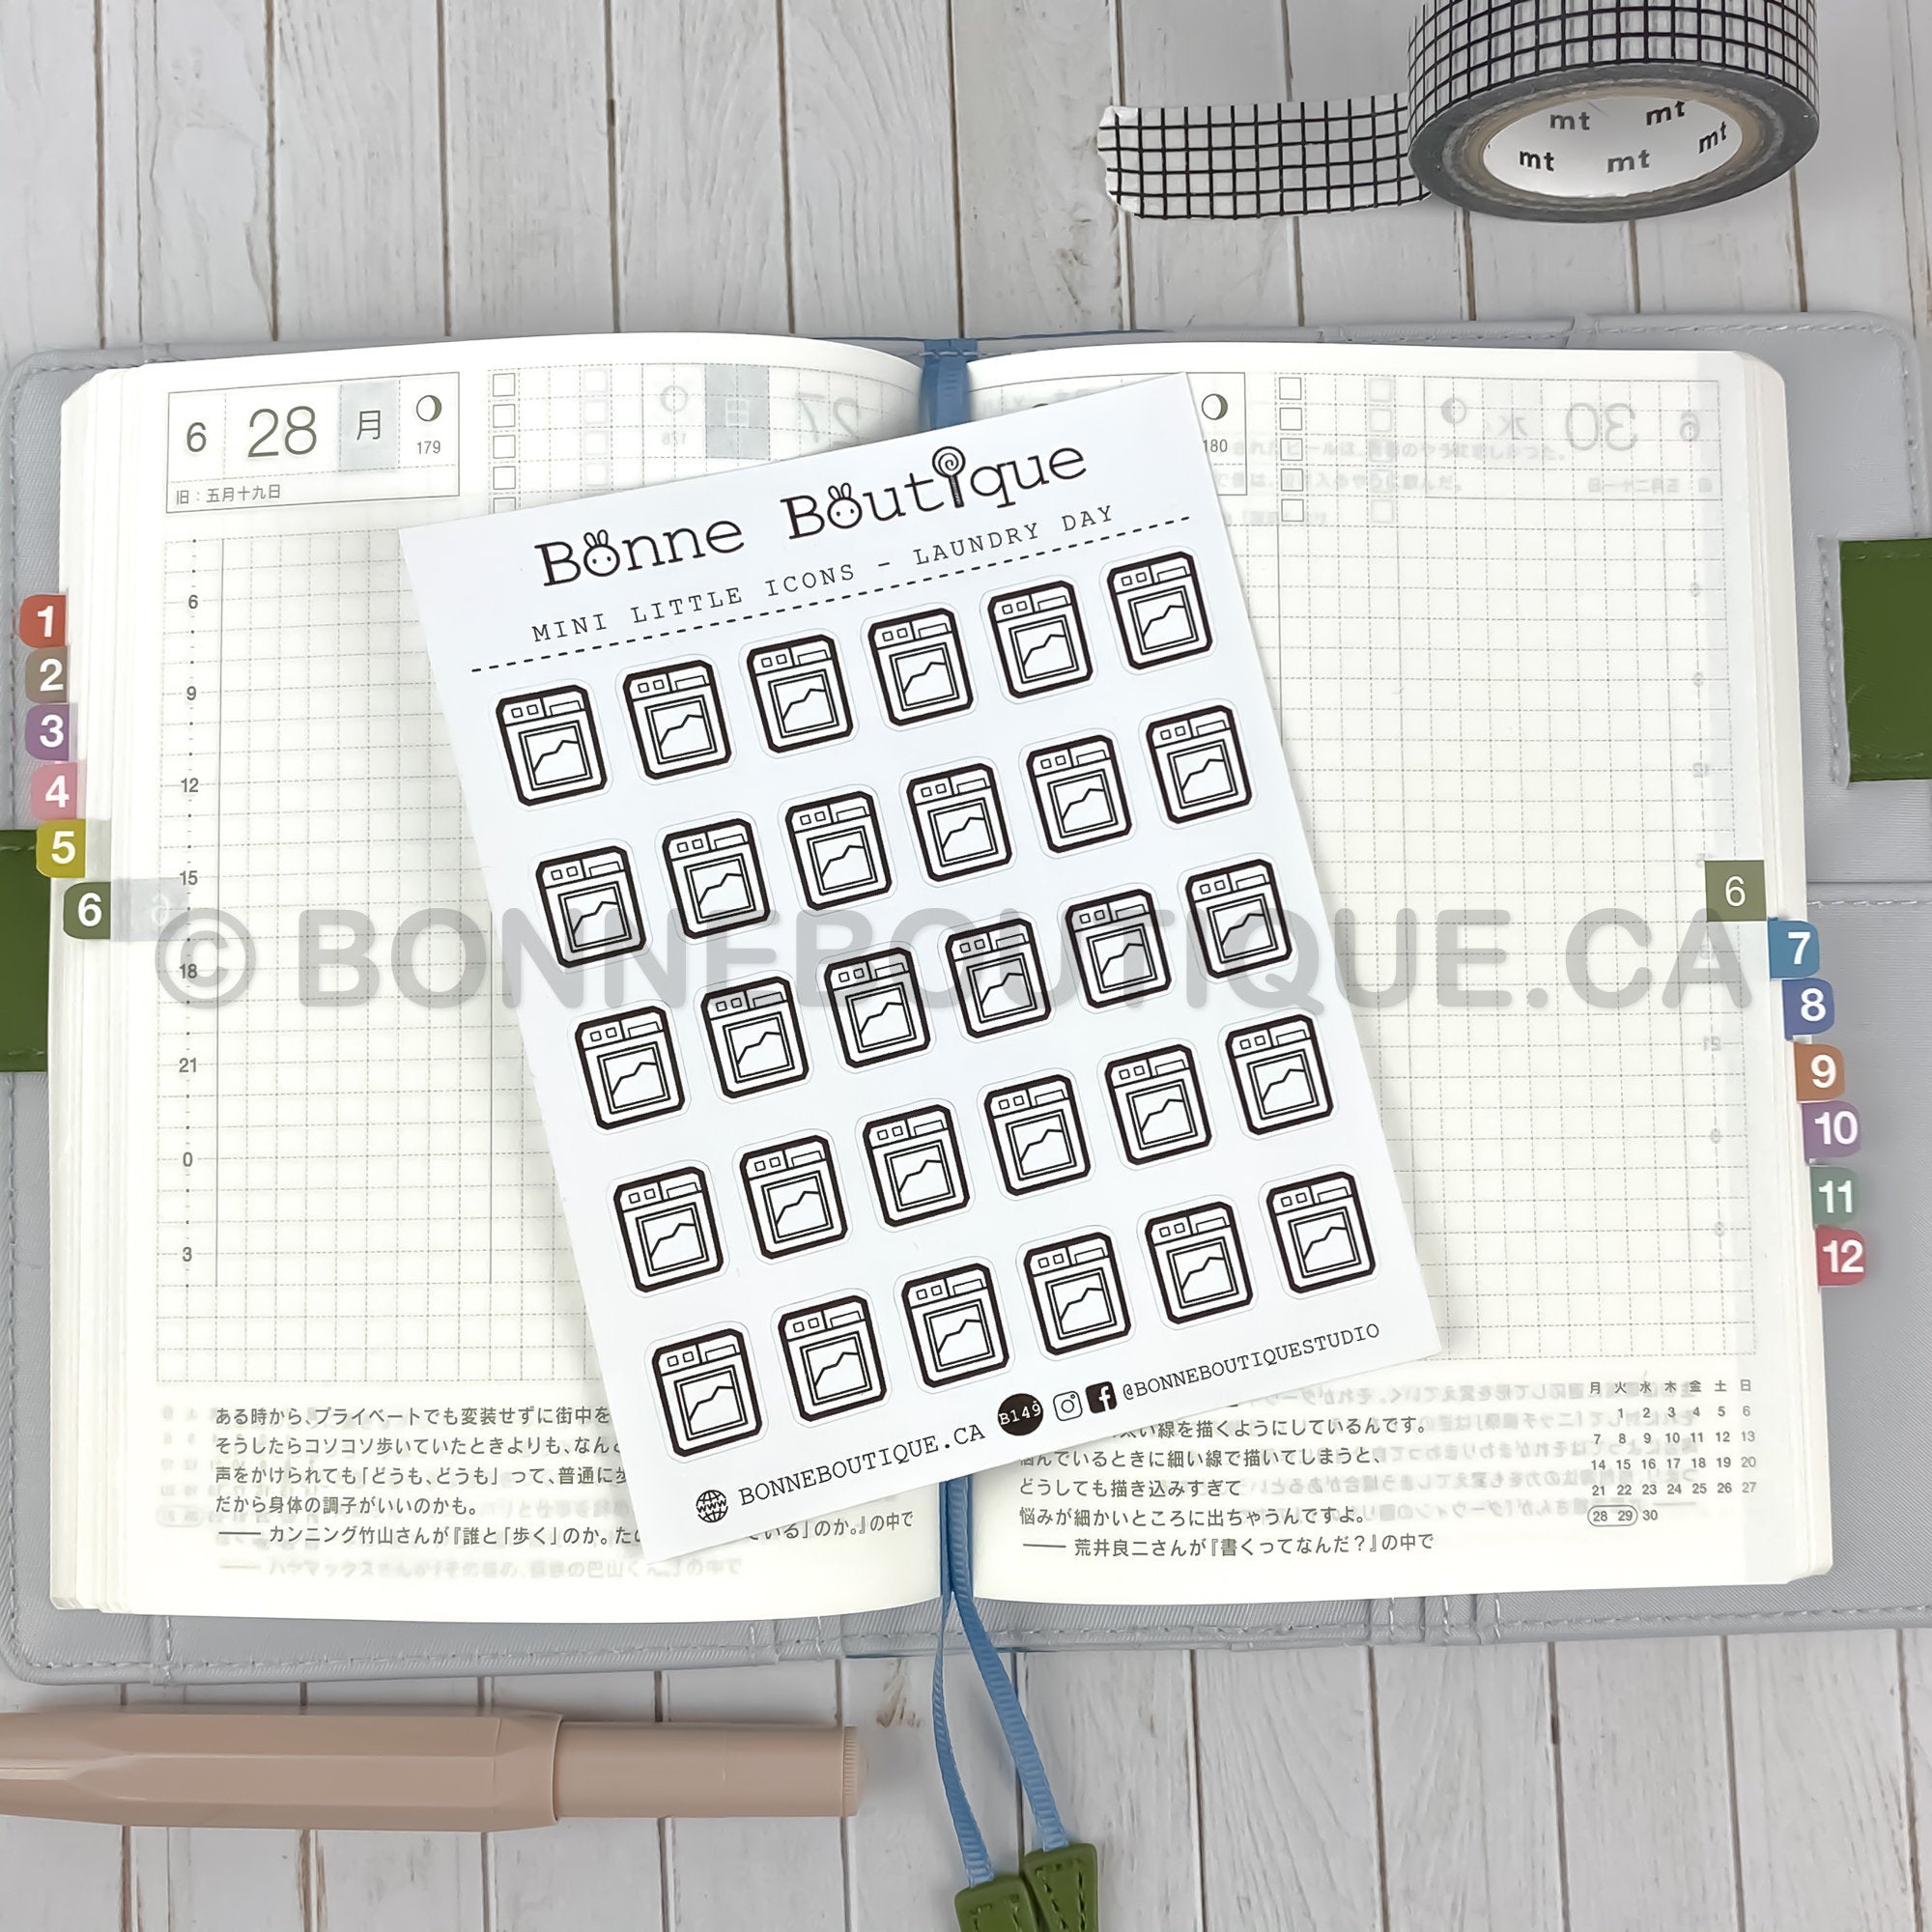 MINI LITTLE ICONS - Geometric Washing Machine - Chore Reminders Tracker Stickers